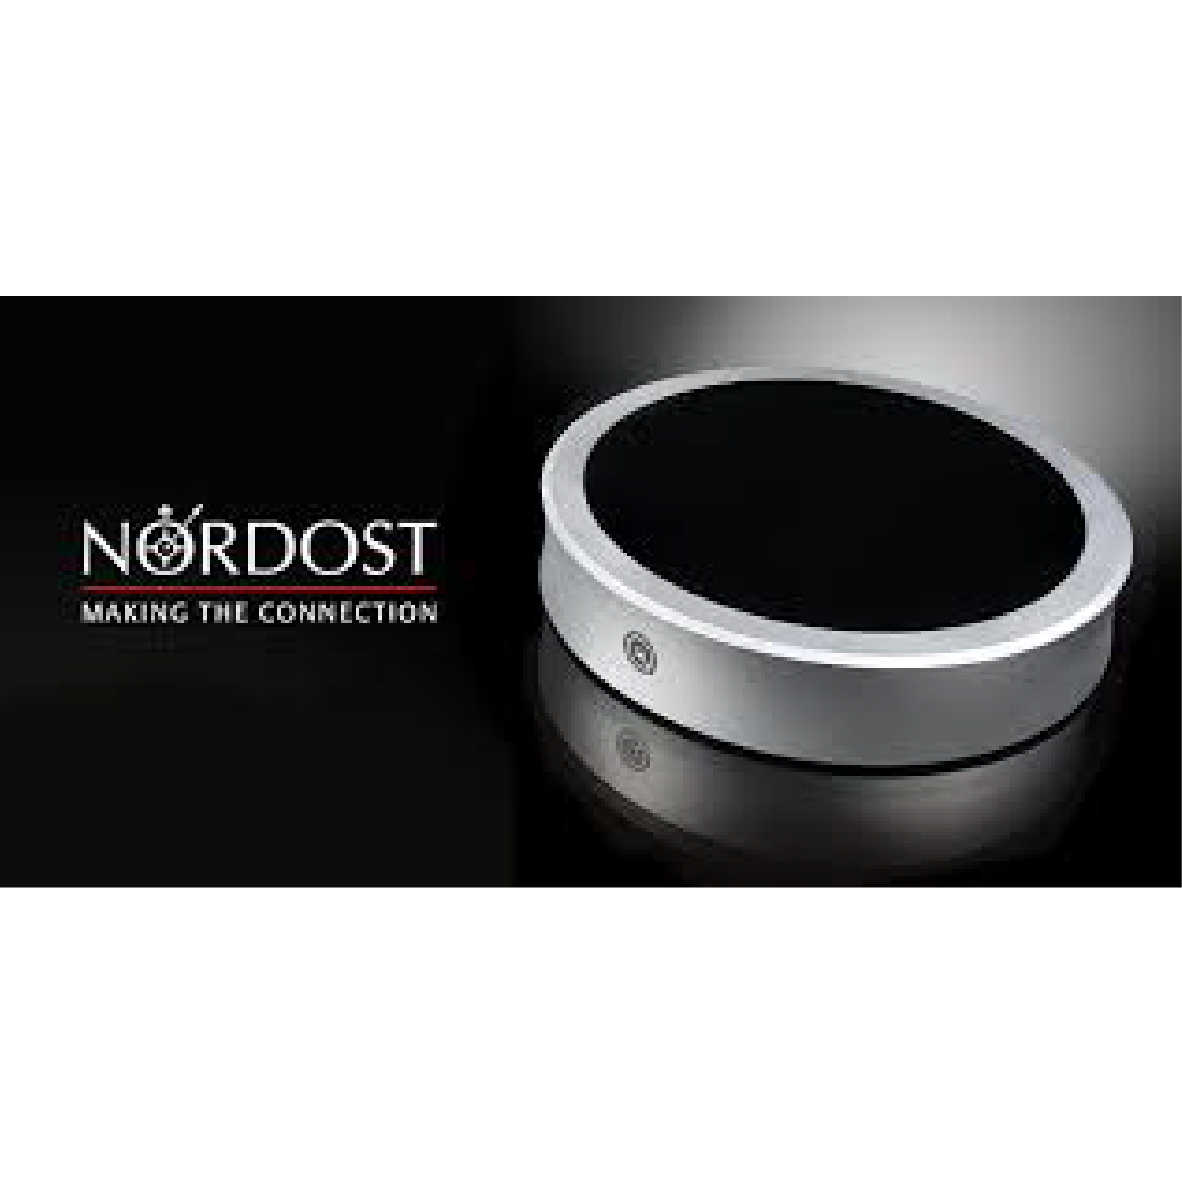 Nordost Qpoint 降低電噪 共振調諧器 共振同步器 | 金曲音響